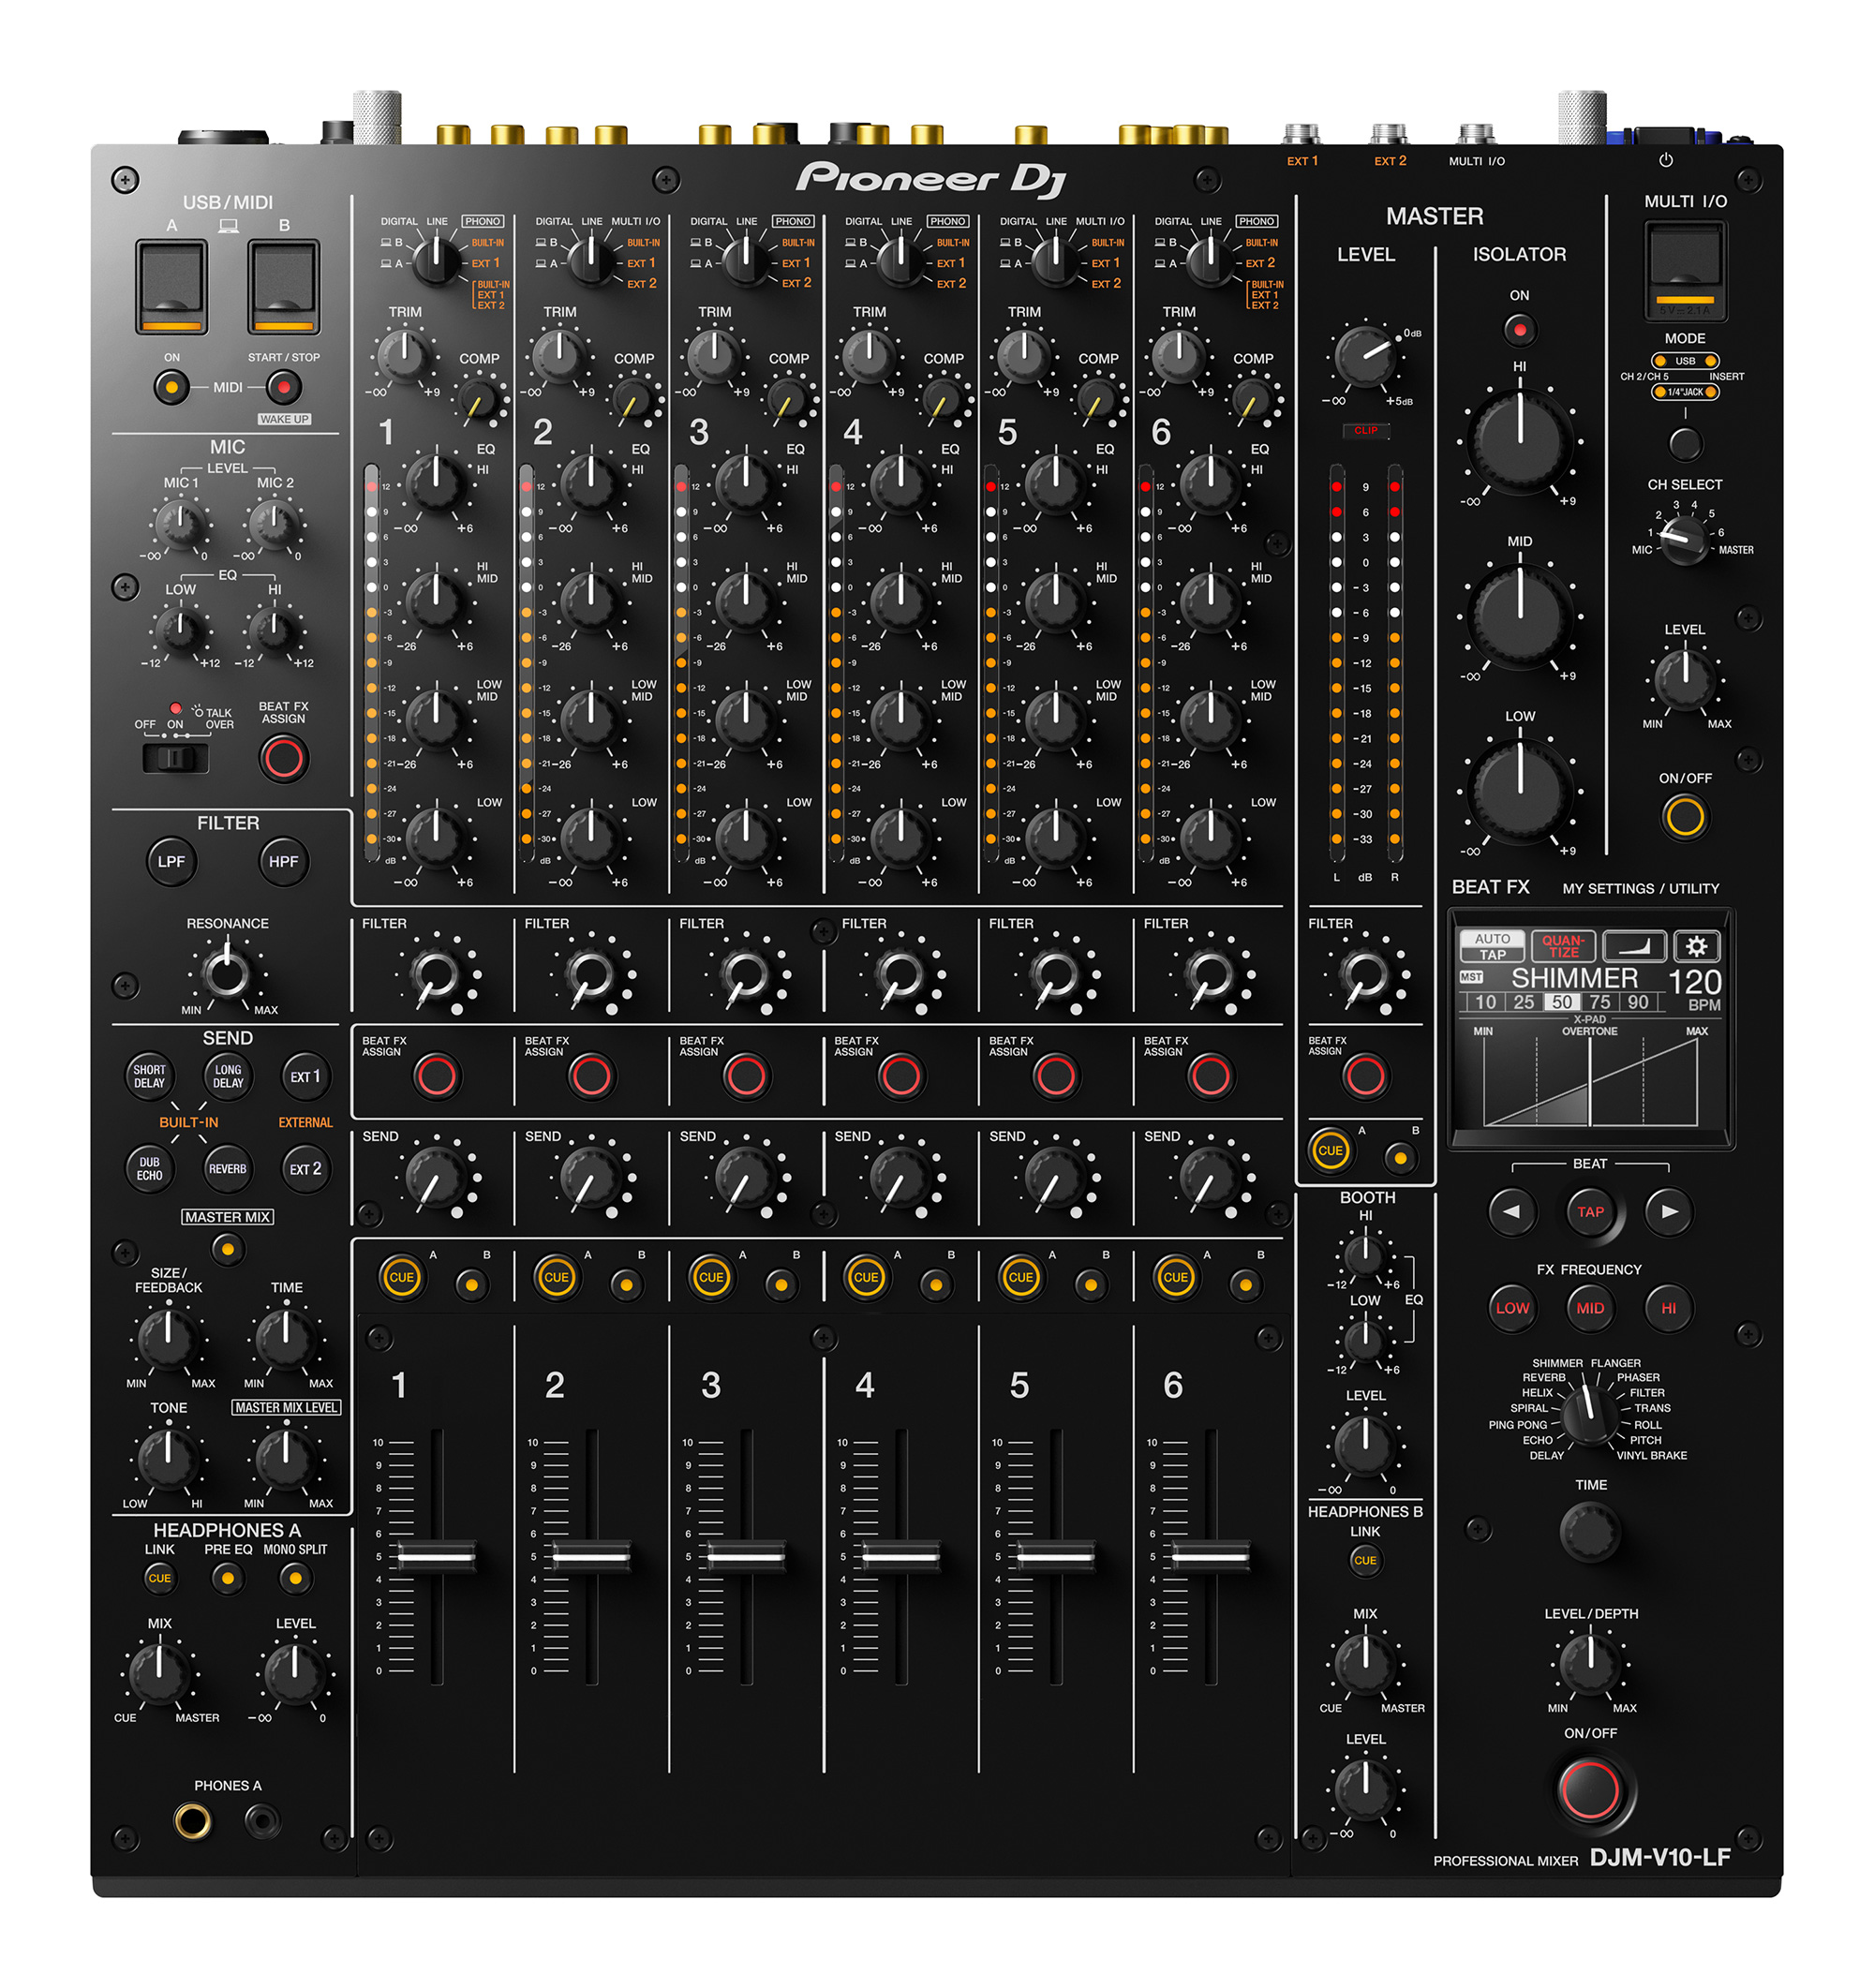 Nuevo mixer Pioneer DDJ-V10-LF